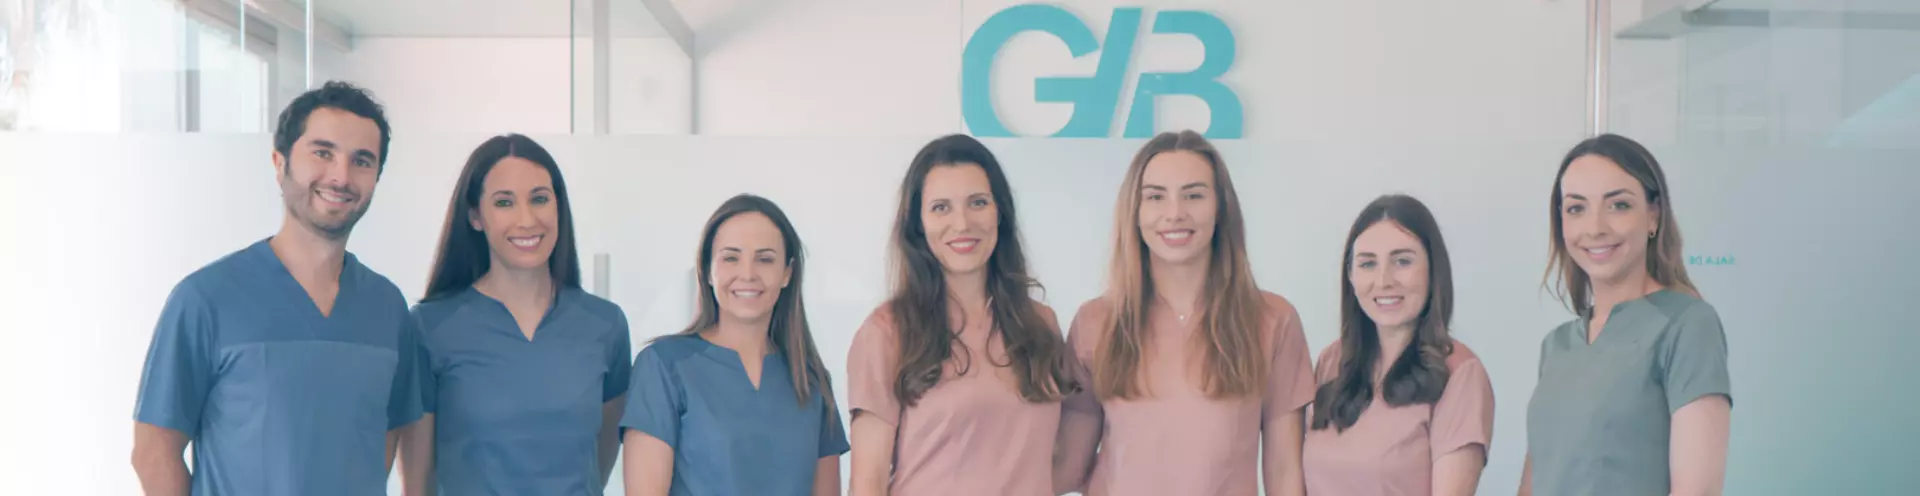 Equipo Clínica Gilabert odontología avanzada